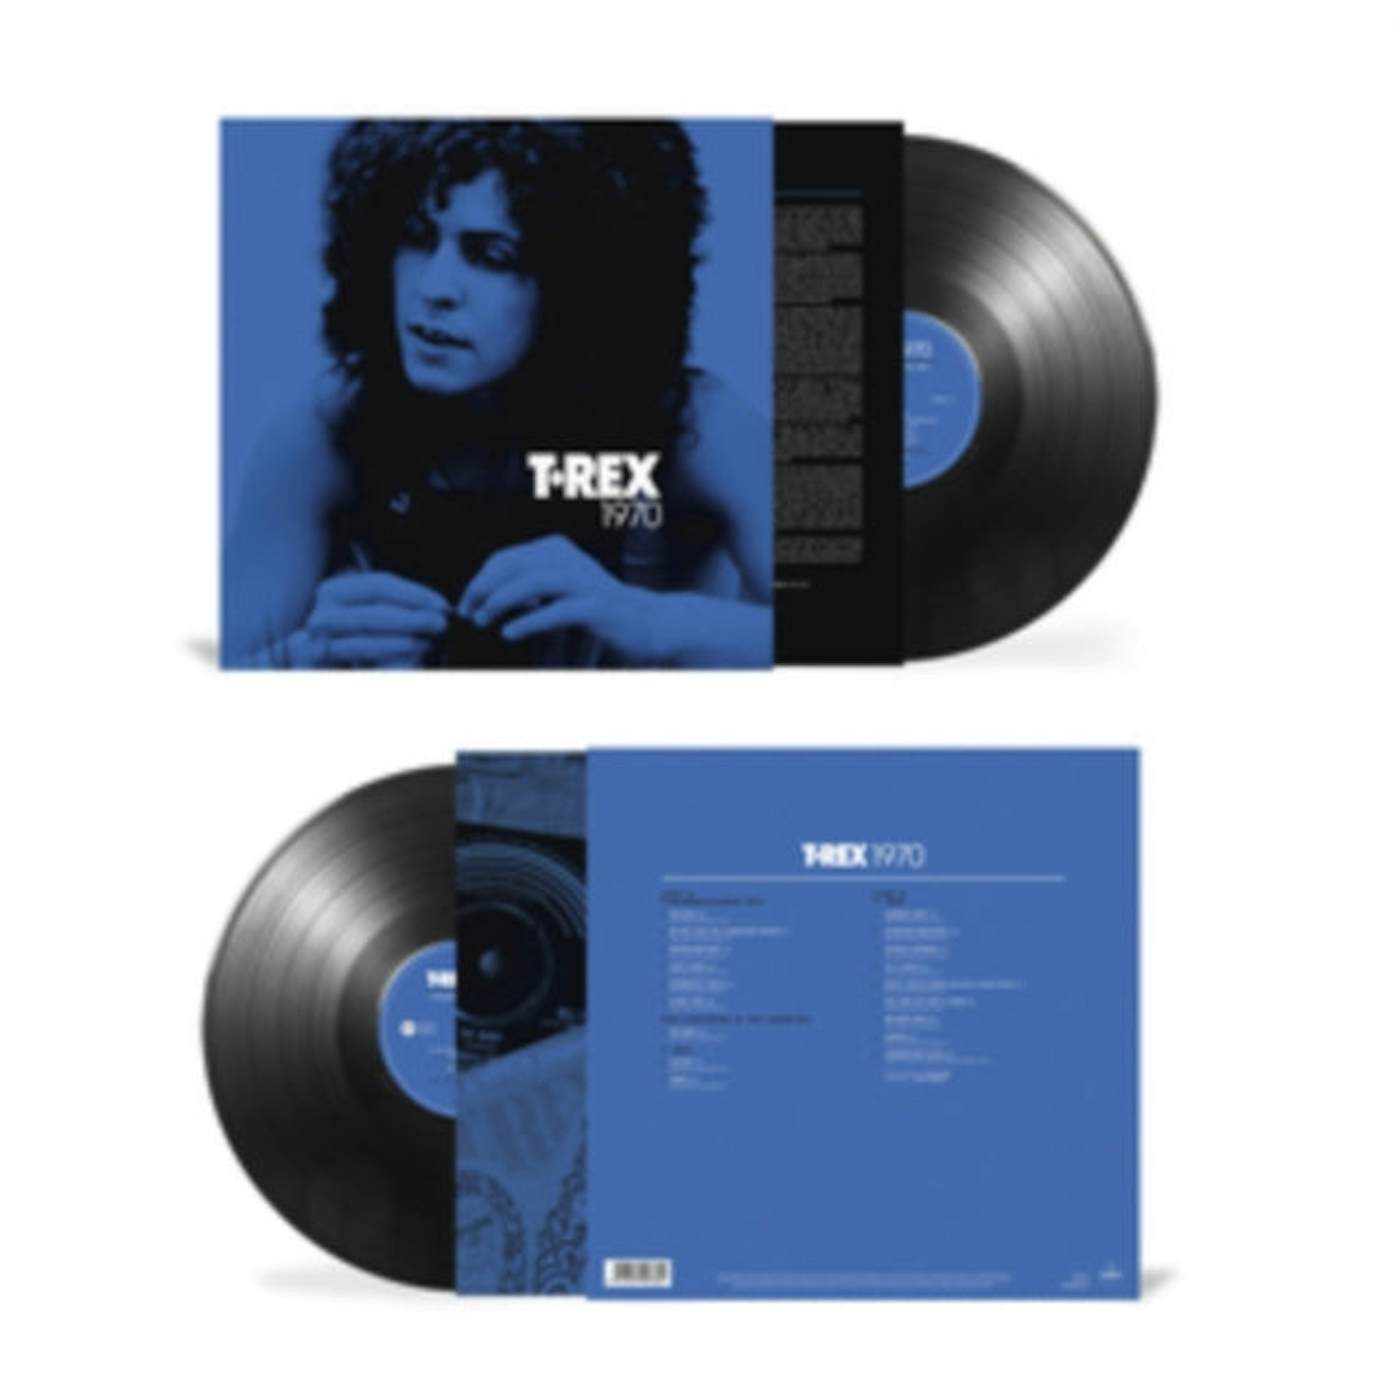 T. Rex LP Vinyl Record - 1970